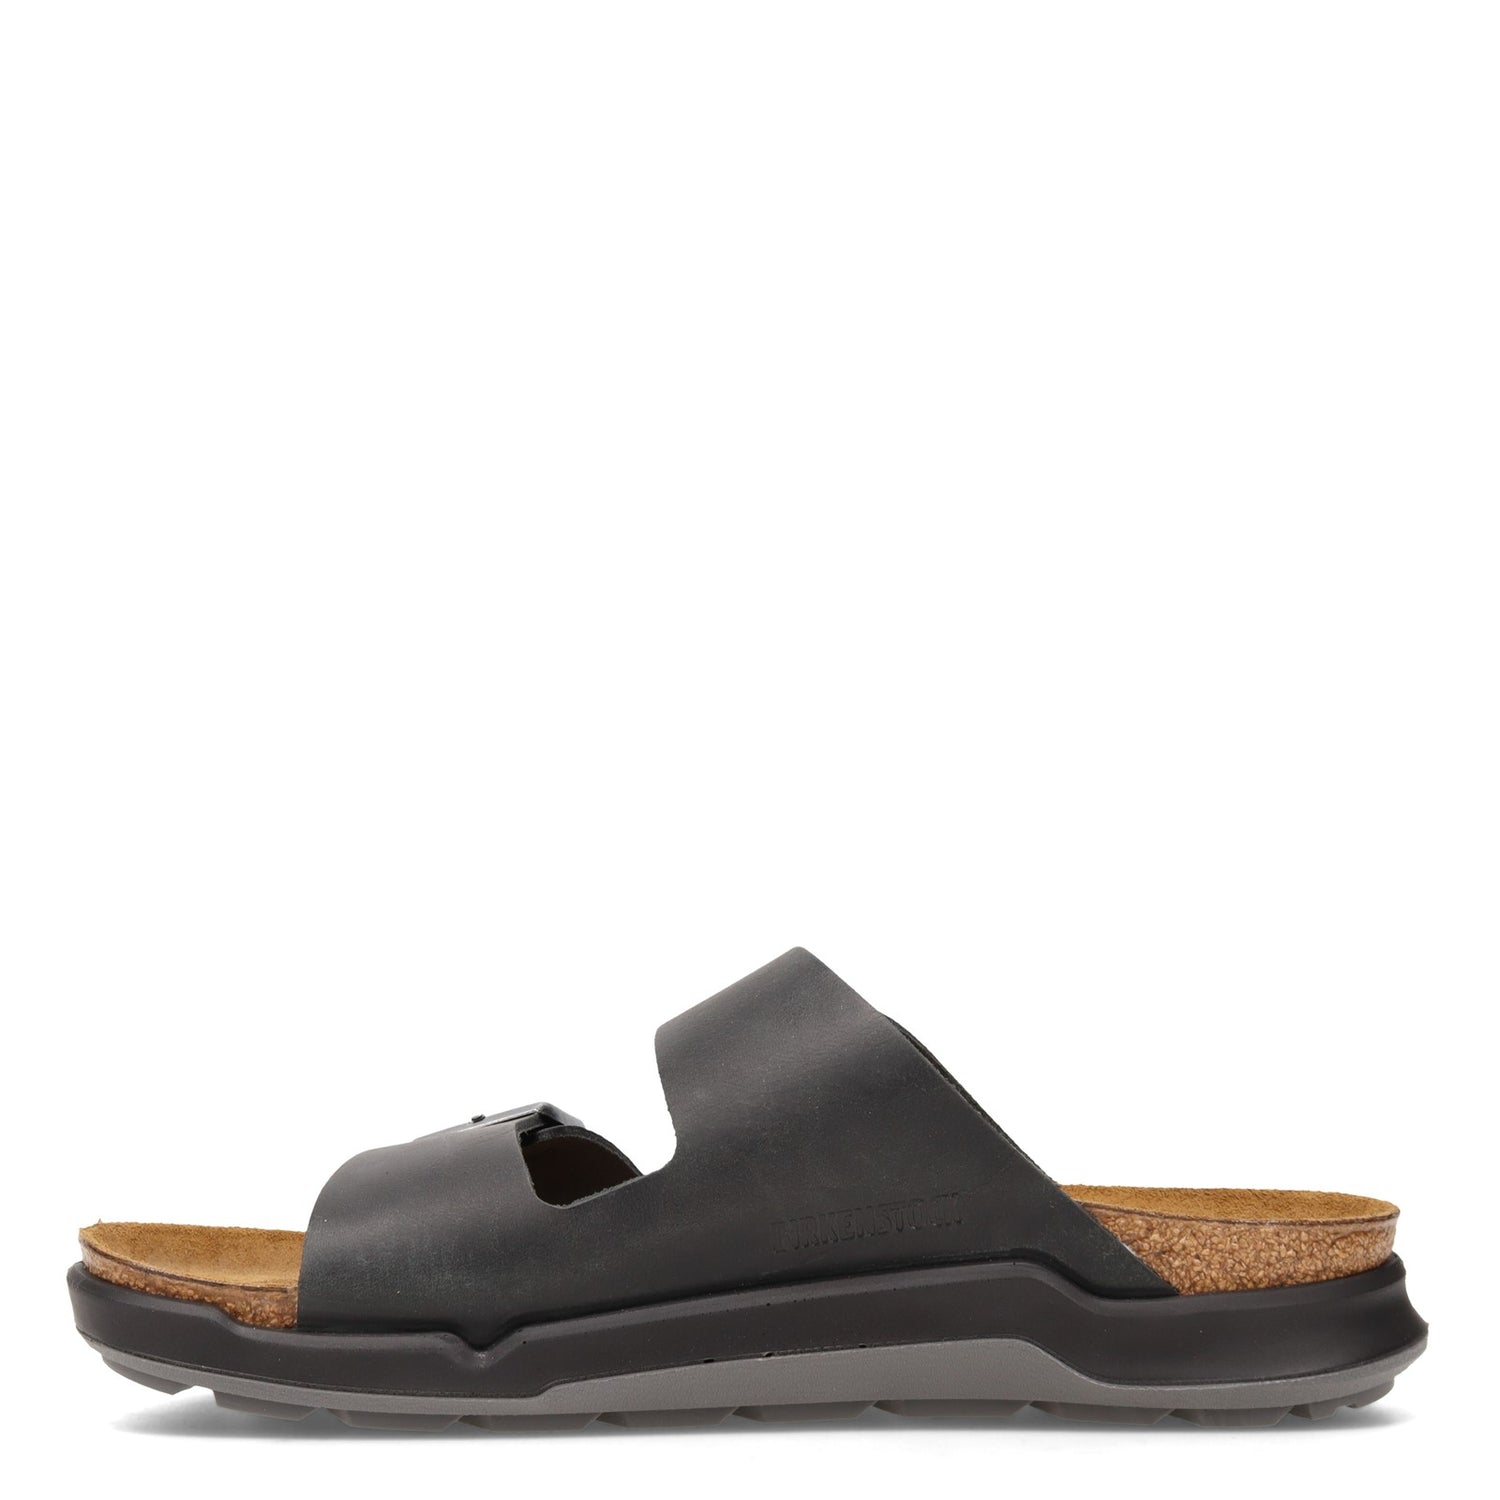 Peltz Shoes  Men's Birkenstock Arizona Rugged Sandal - Regular Width BLACK R 1018 461